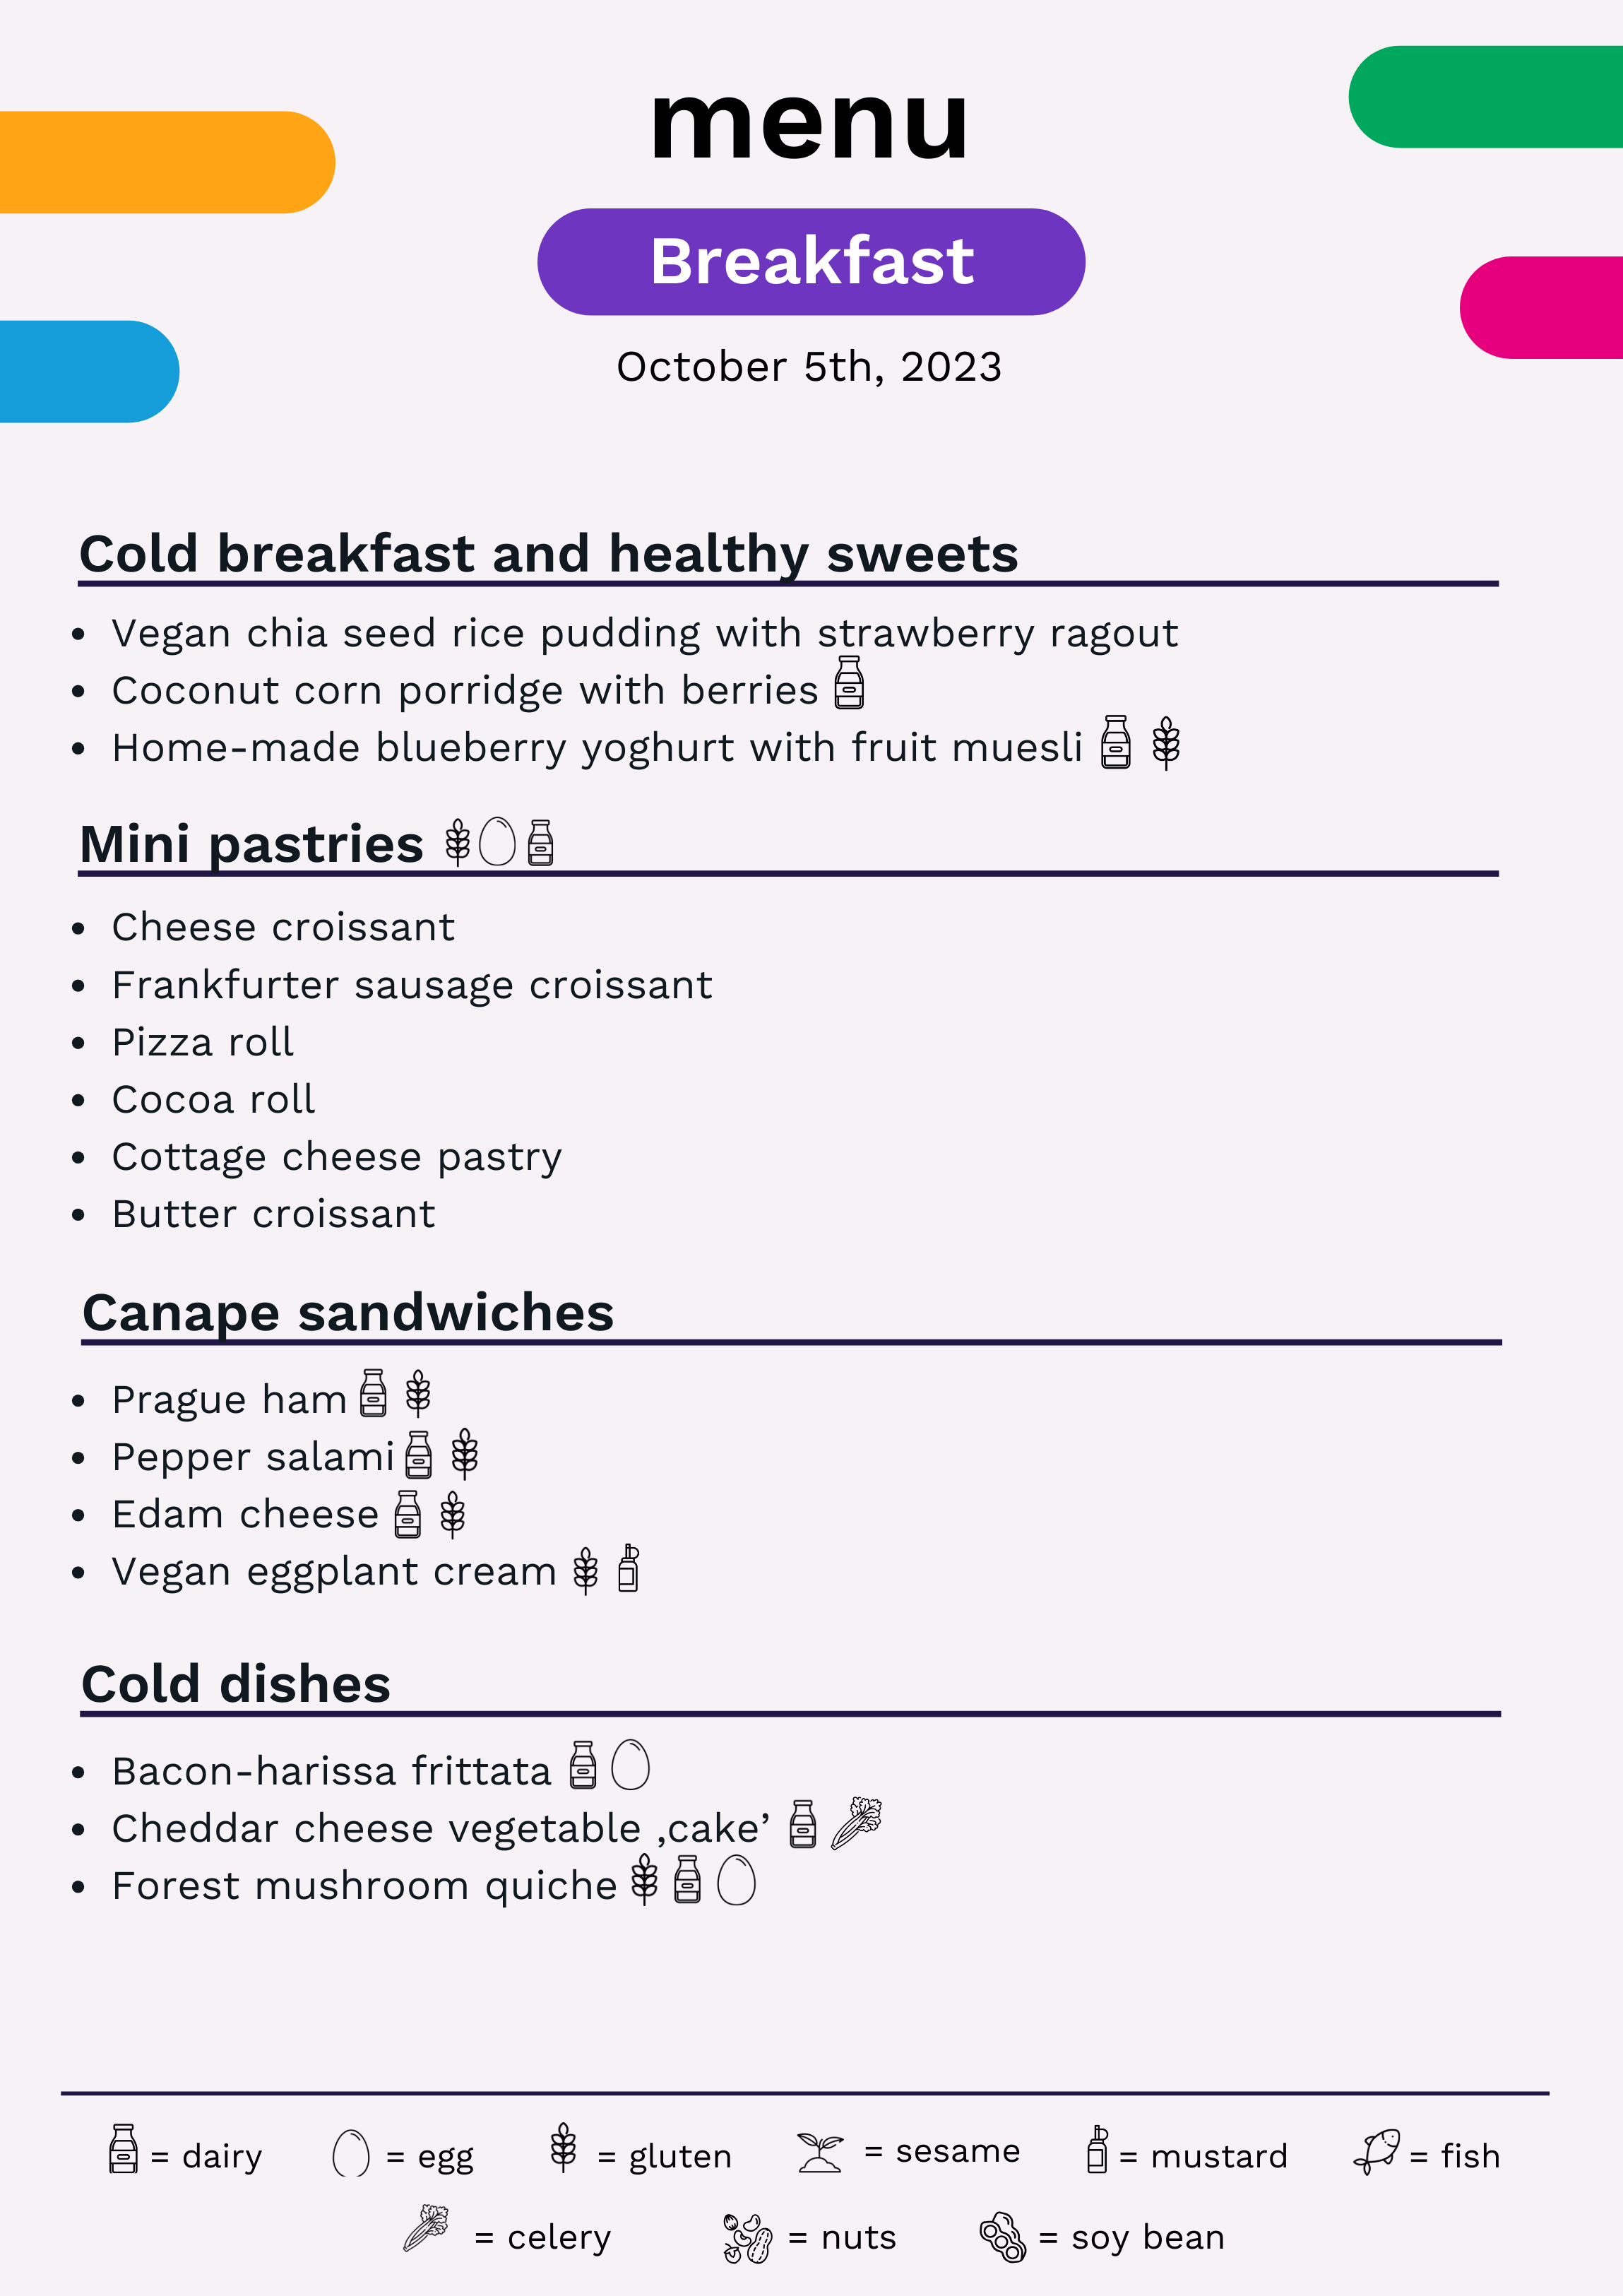 crunch.2023.food-menu.image.1